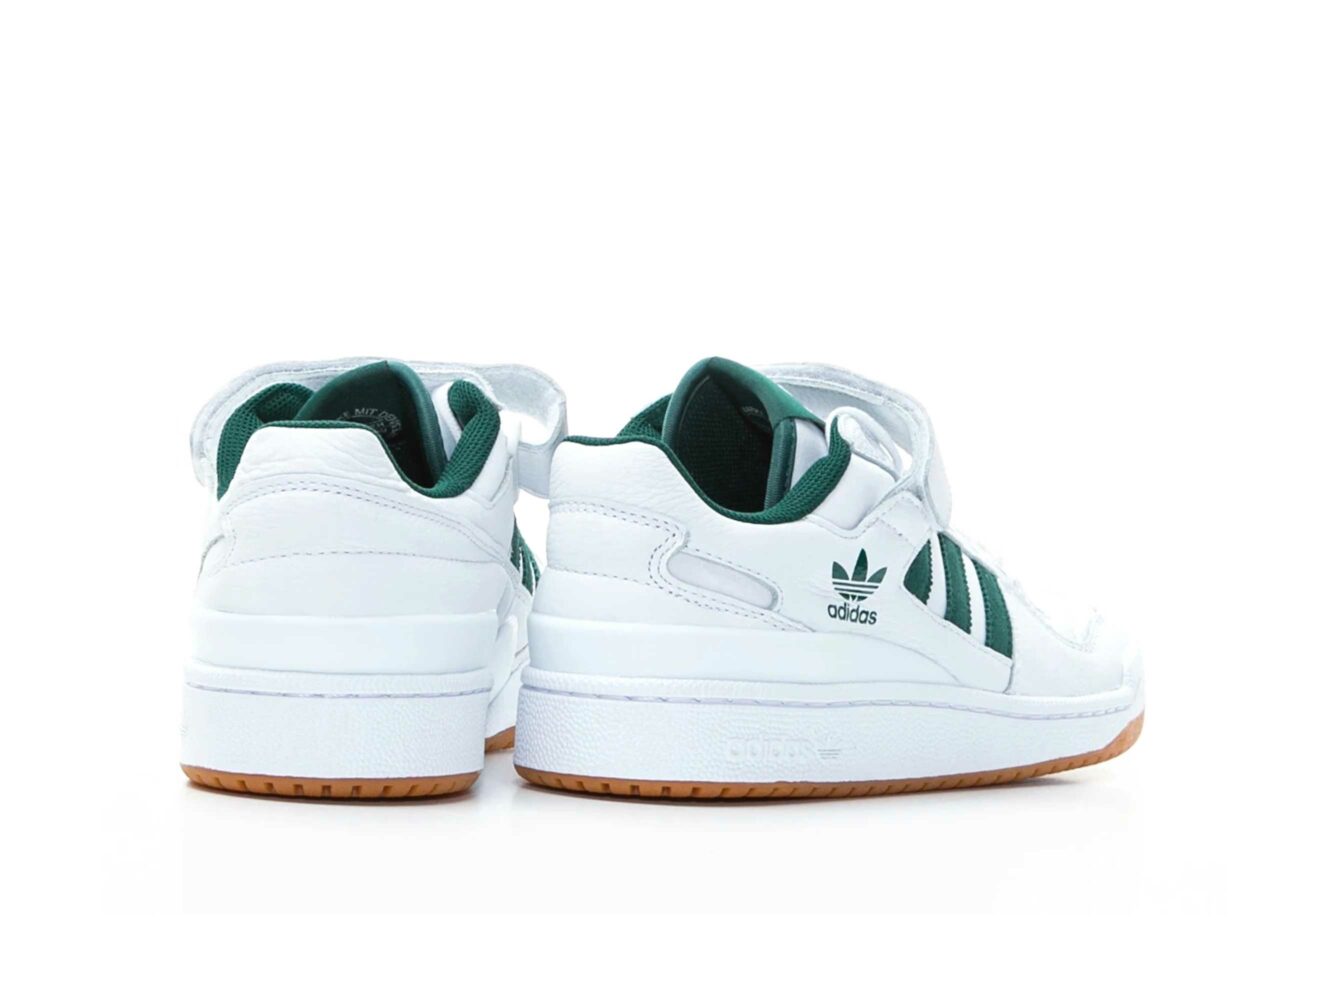 adidas forum 84 white green AQ1261 купить